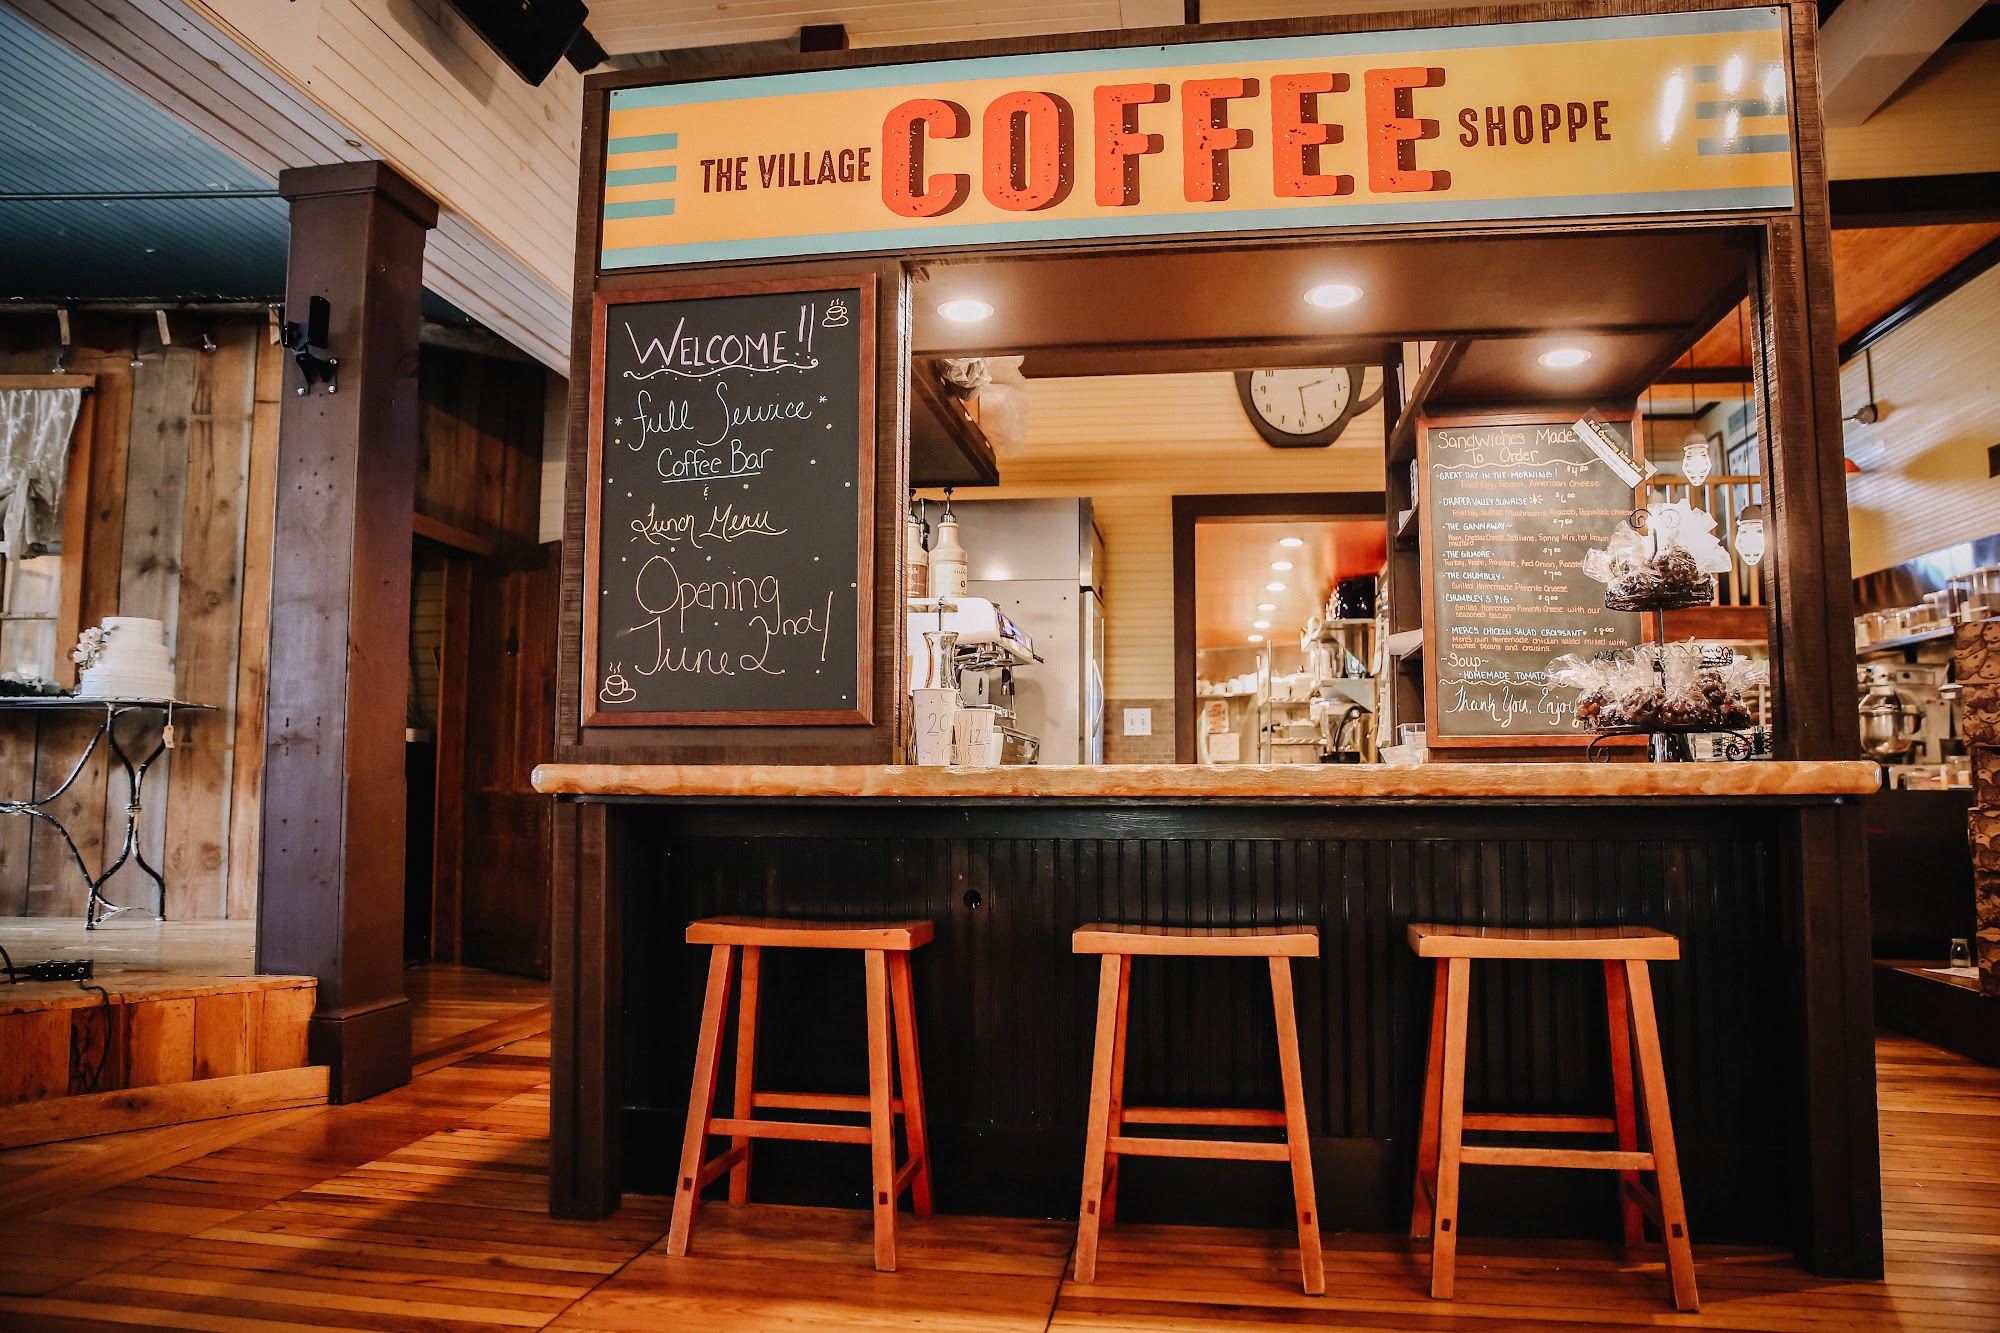 The Village Coffee Shoppe